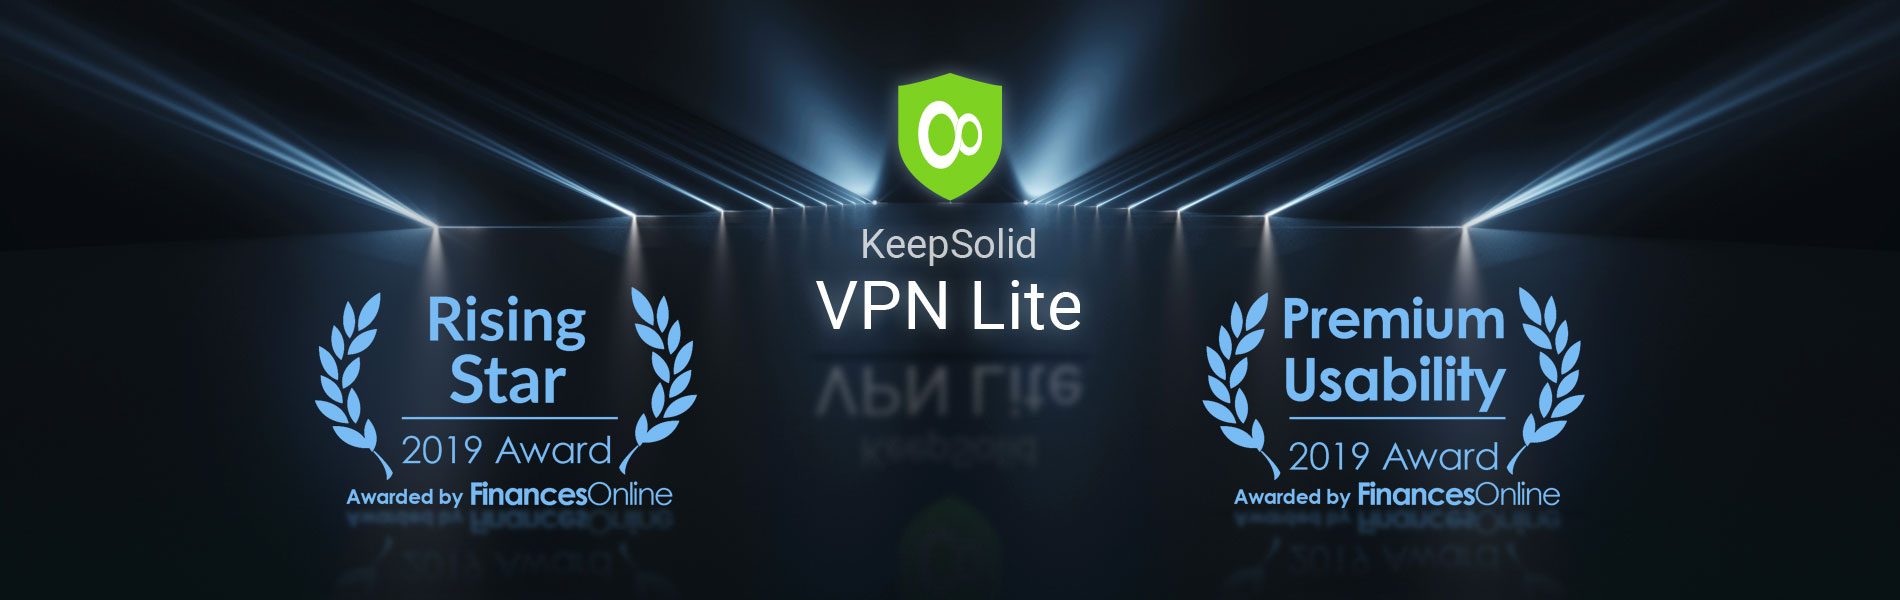 KeepSolid VPN Lite awards by FinancesOnline - Rising Start & Premium Visability